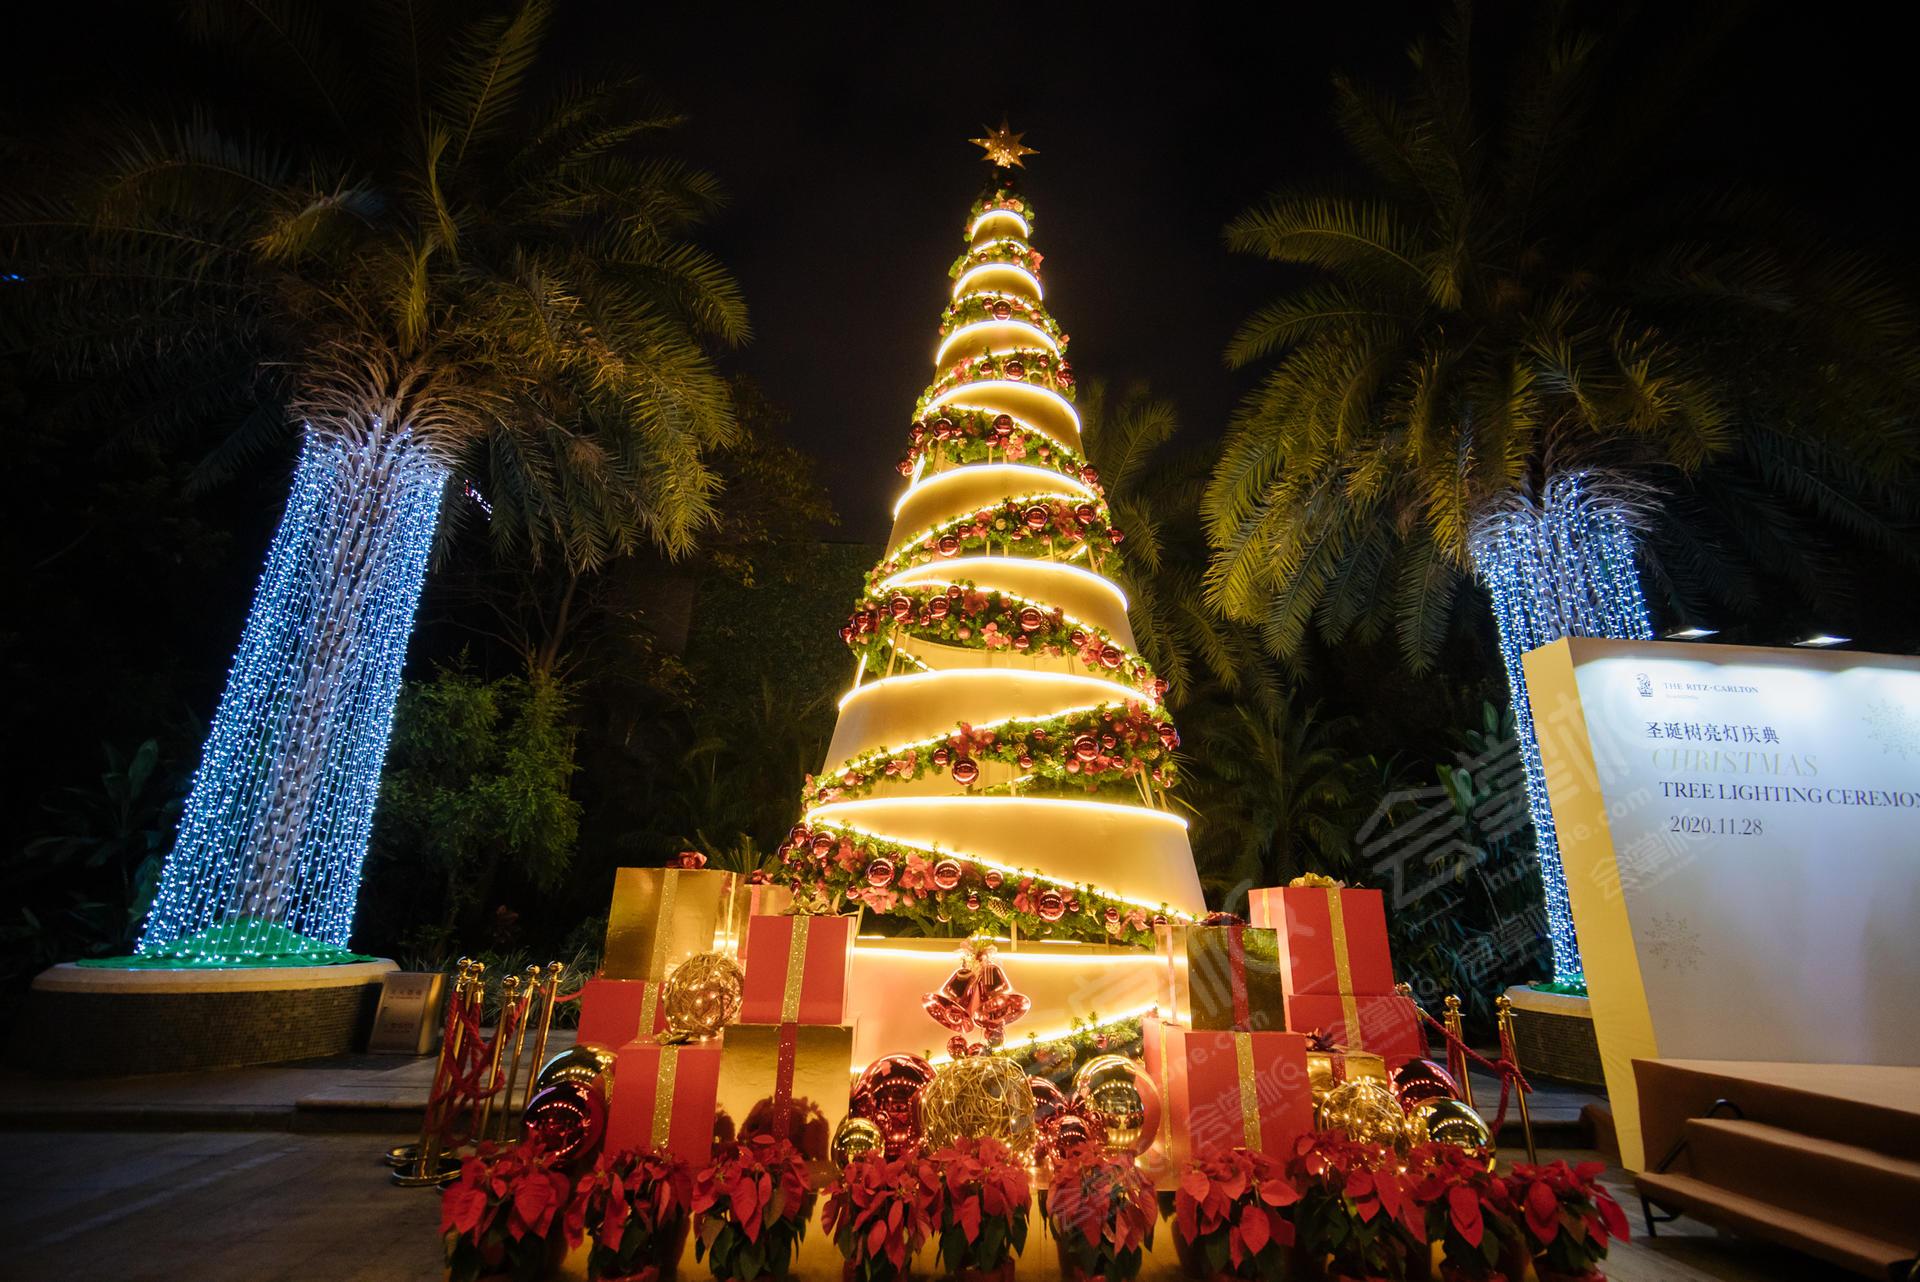 「圣诞树亮灯庆典」CHRISTMAS TREE LIGHTING CEREMONY